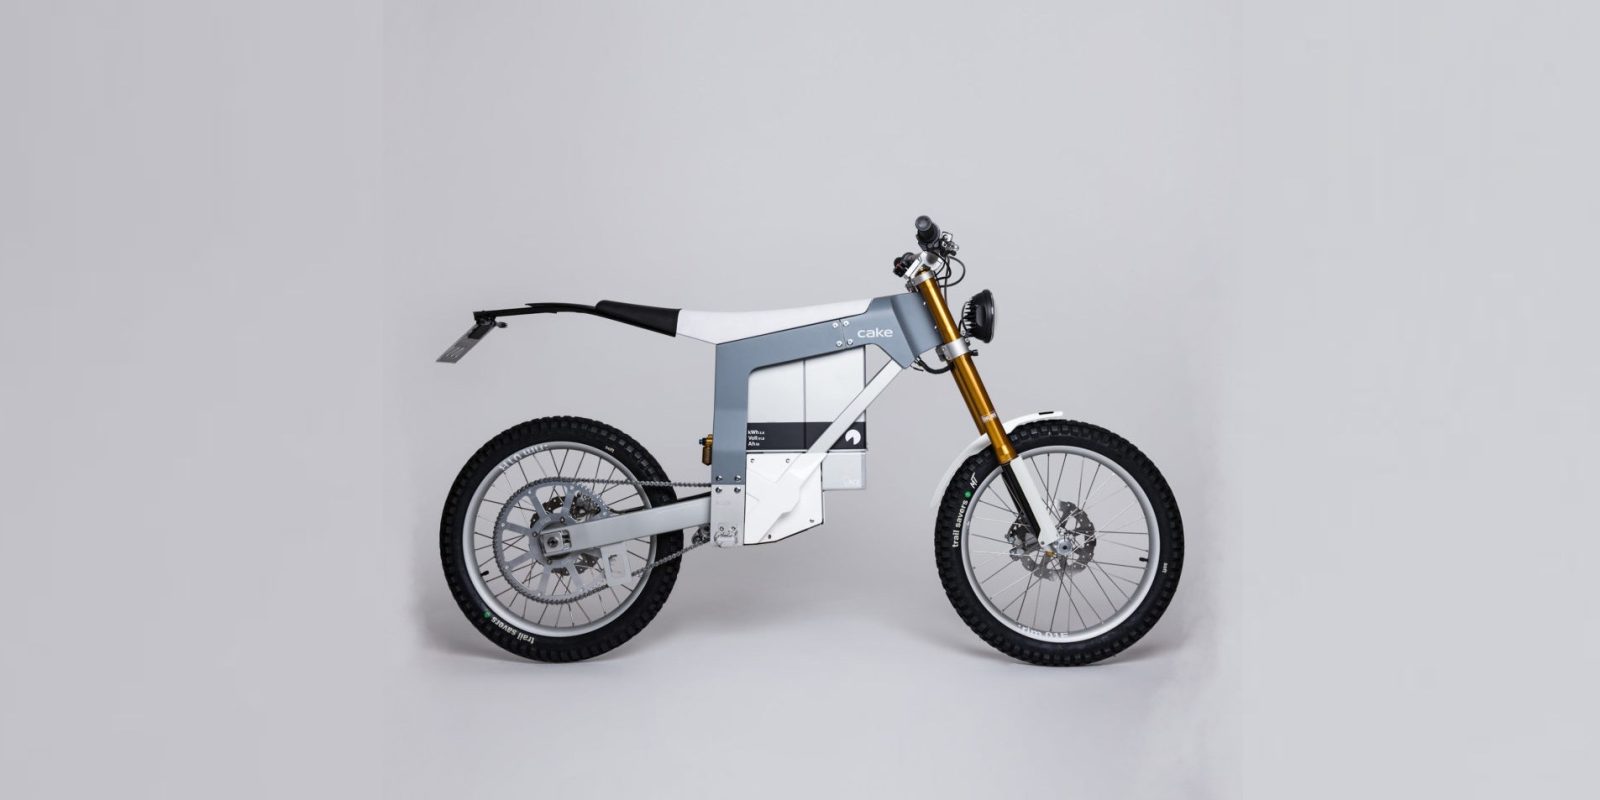 Kalk& electric motorcycle